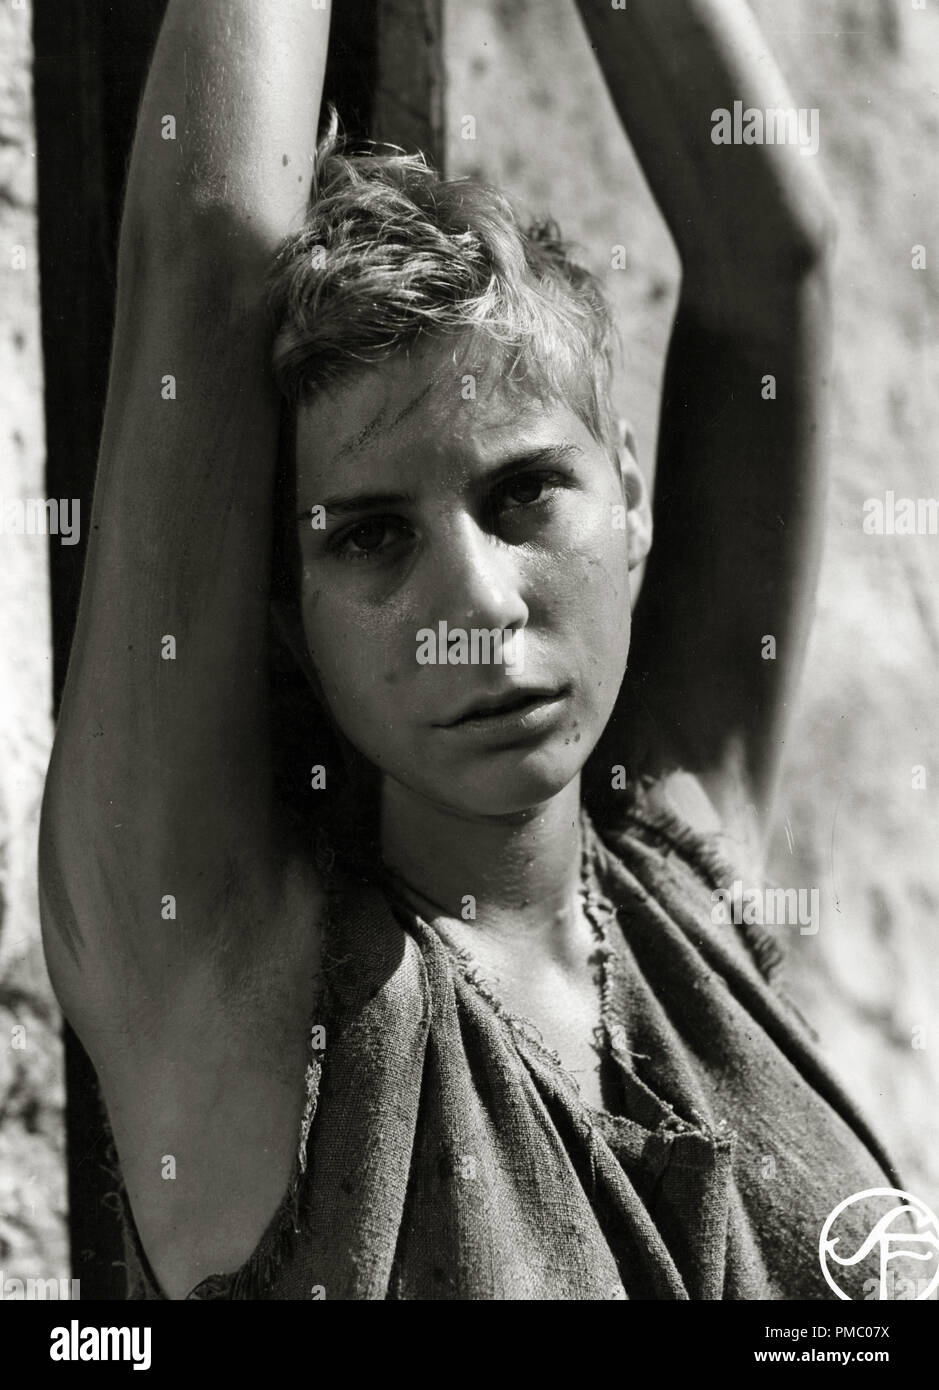 'El séptimo sello' (1957) AB Svensk Filmindustri, dirigida por Ingmar Bergman, Referencia de archivo # 33480 881tha Foto de stock